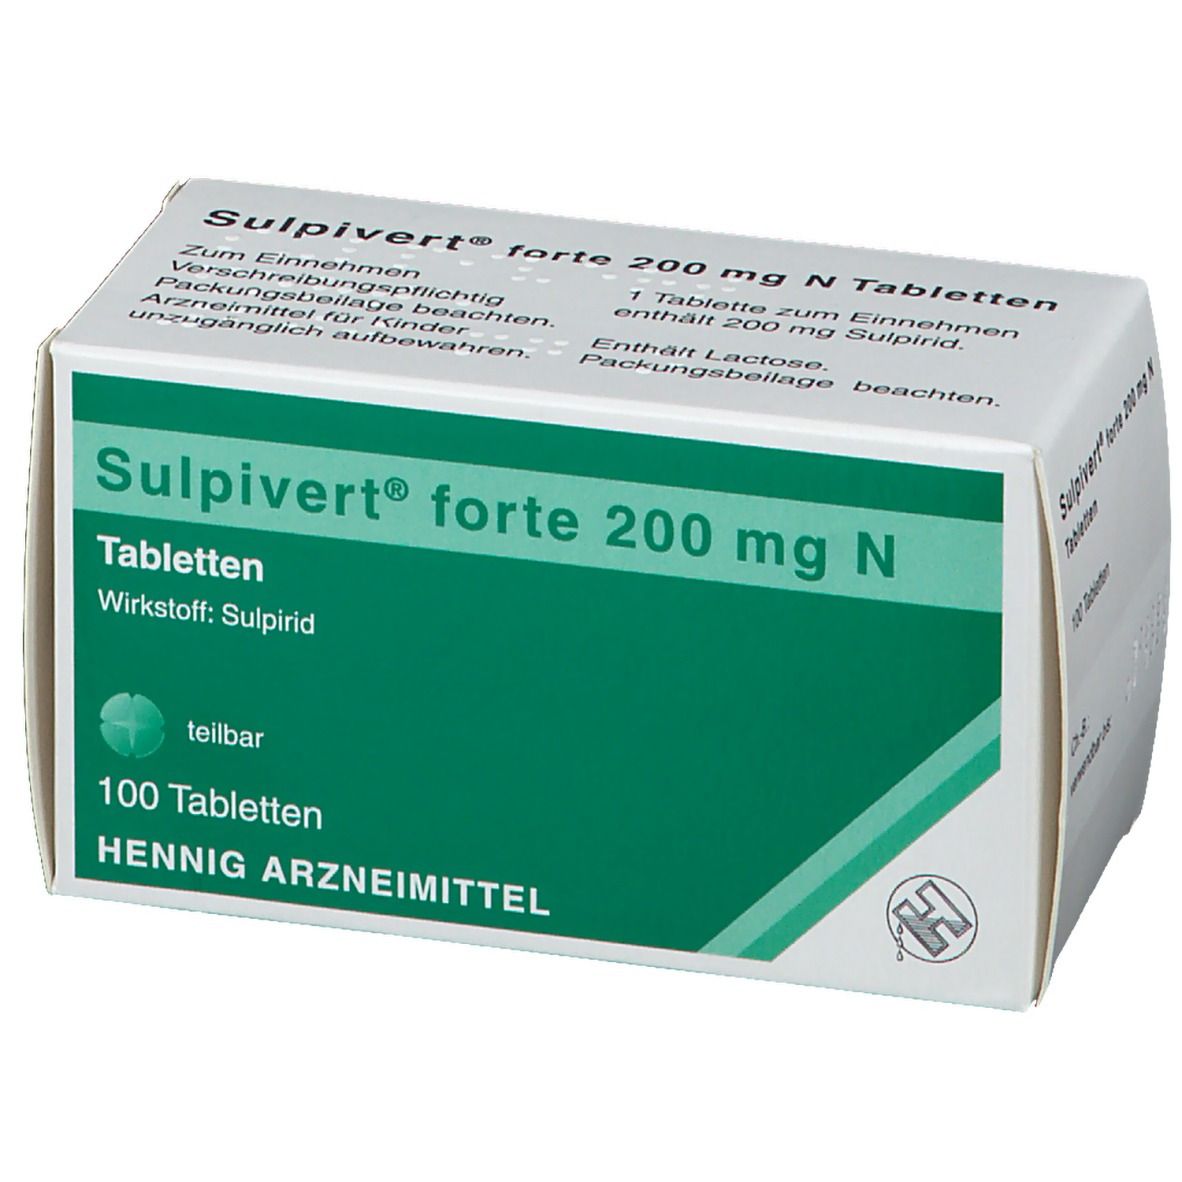 Sulpivert® forte 200 mg N